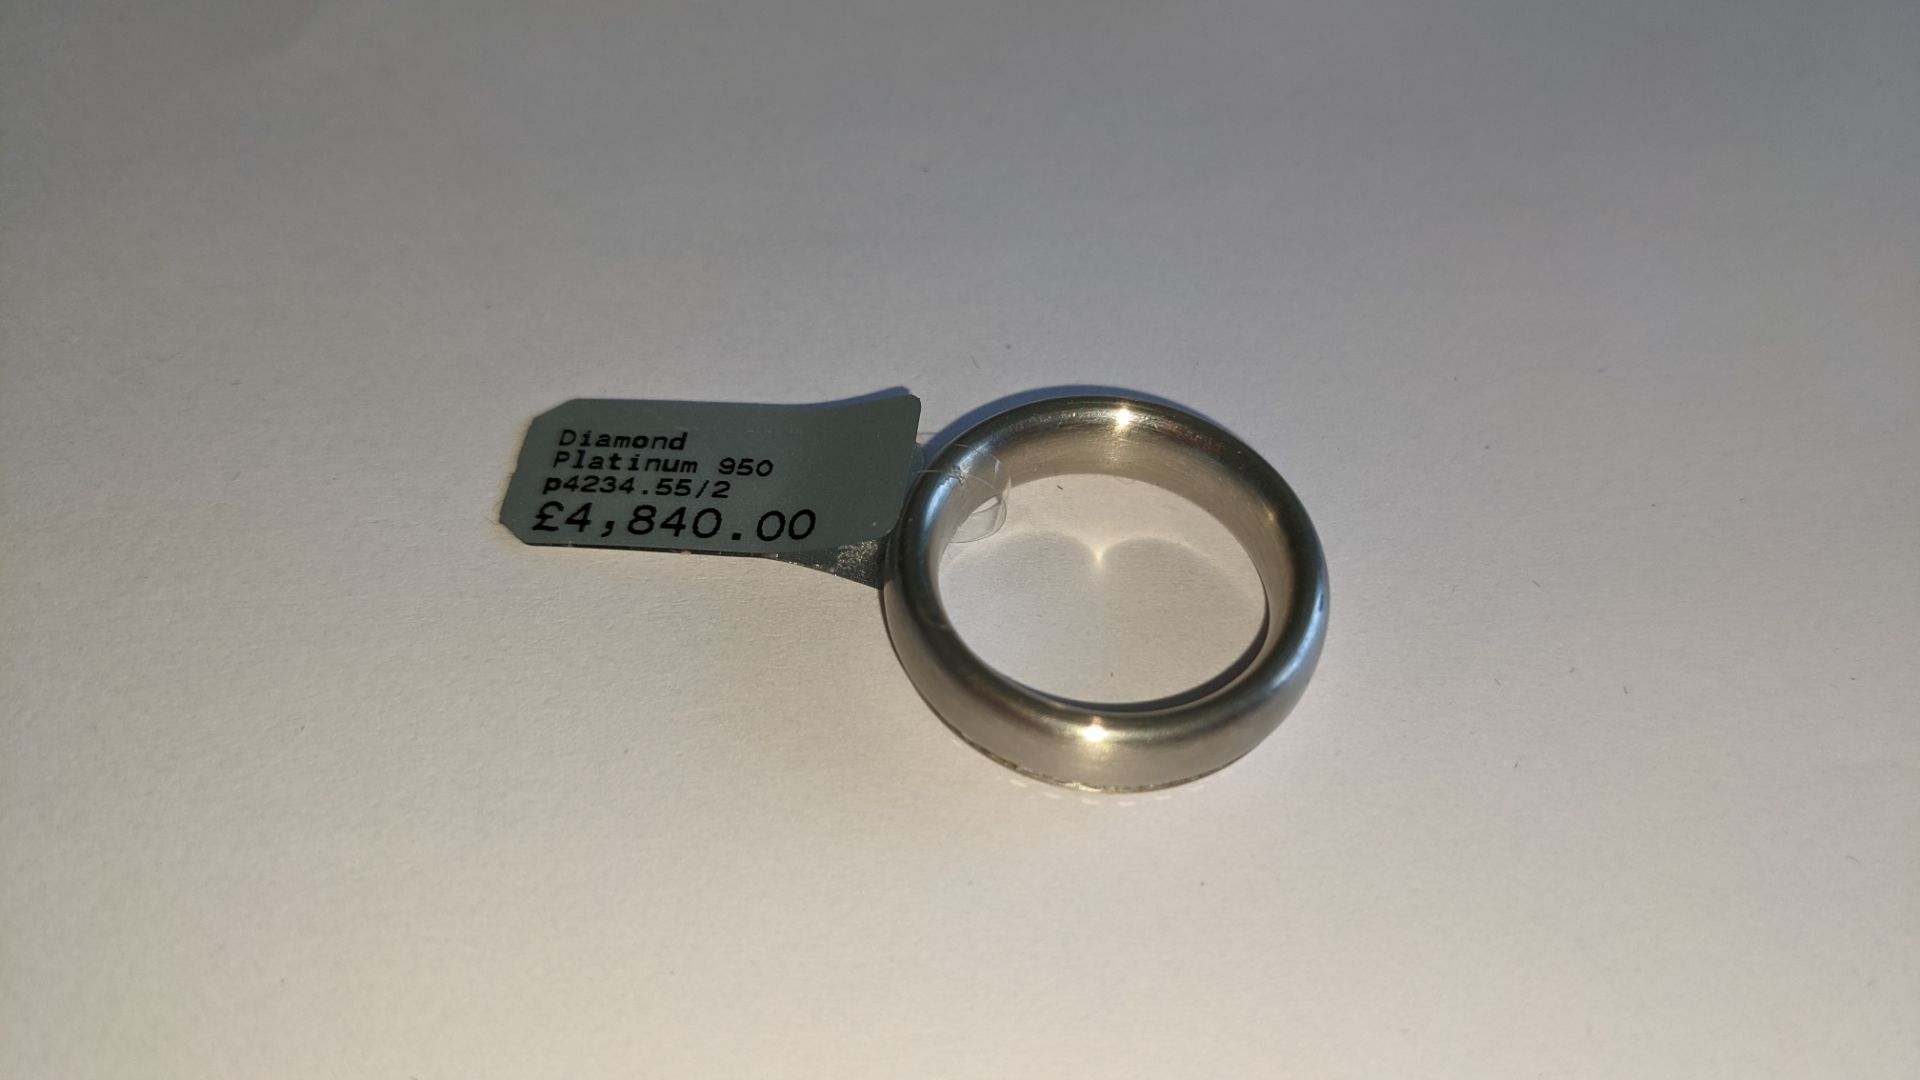 Platinum & diamond ring, 0.51ct of diamonds in total, Platinum 950, RRP £4,840. NB. The diamonds run - Image 12 of 20